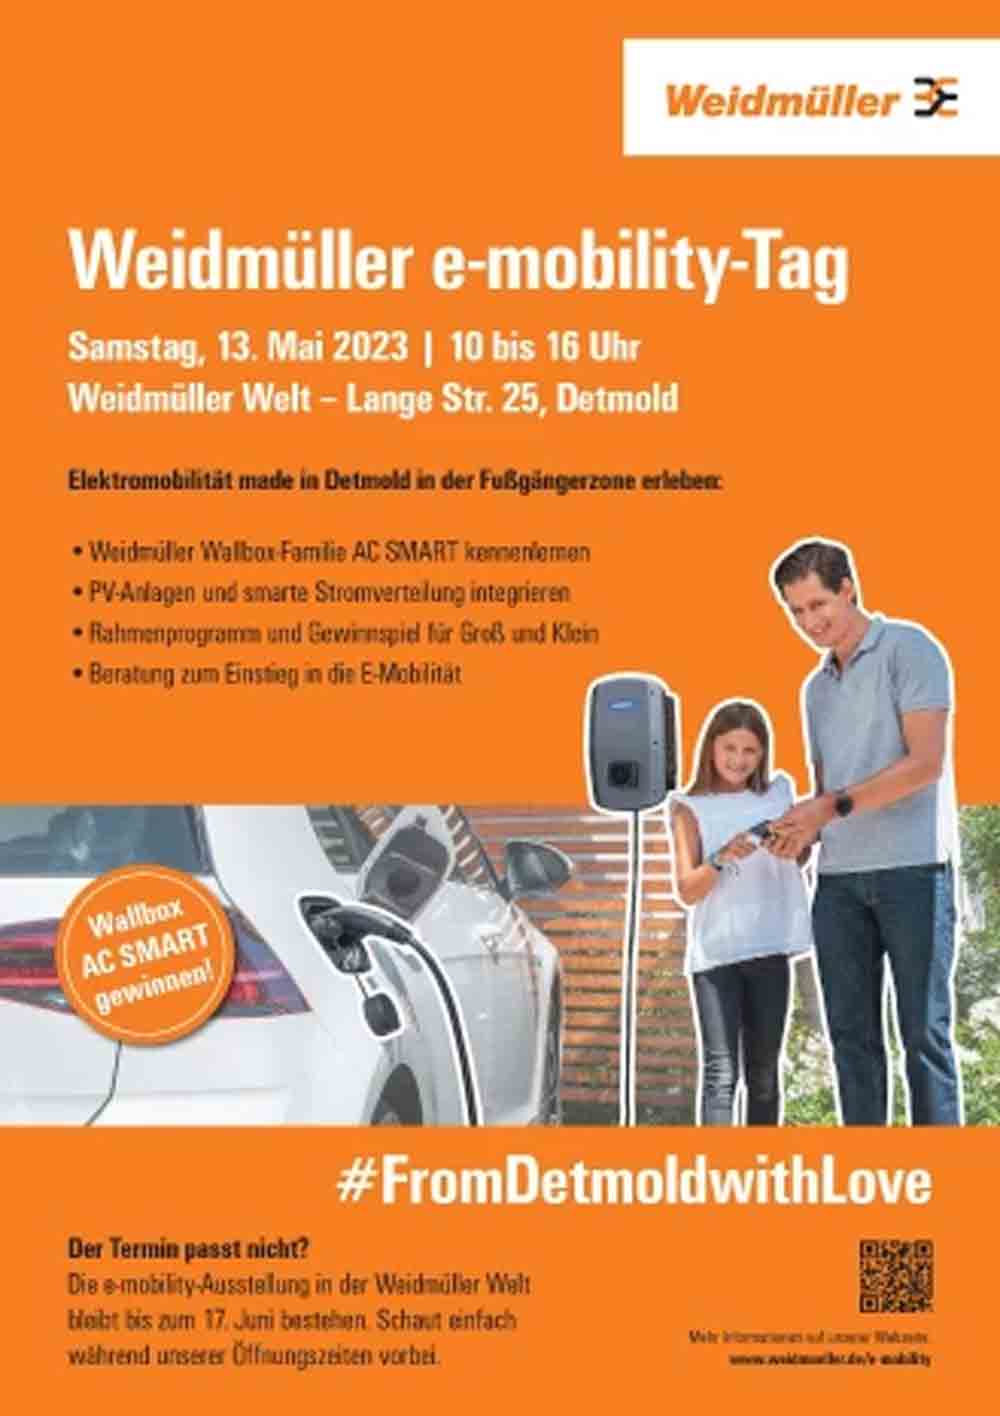 Weidmüller veranstaltet e mobility Tag in der Detmolder Fußgängerzone, 13. Mai 2023